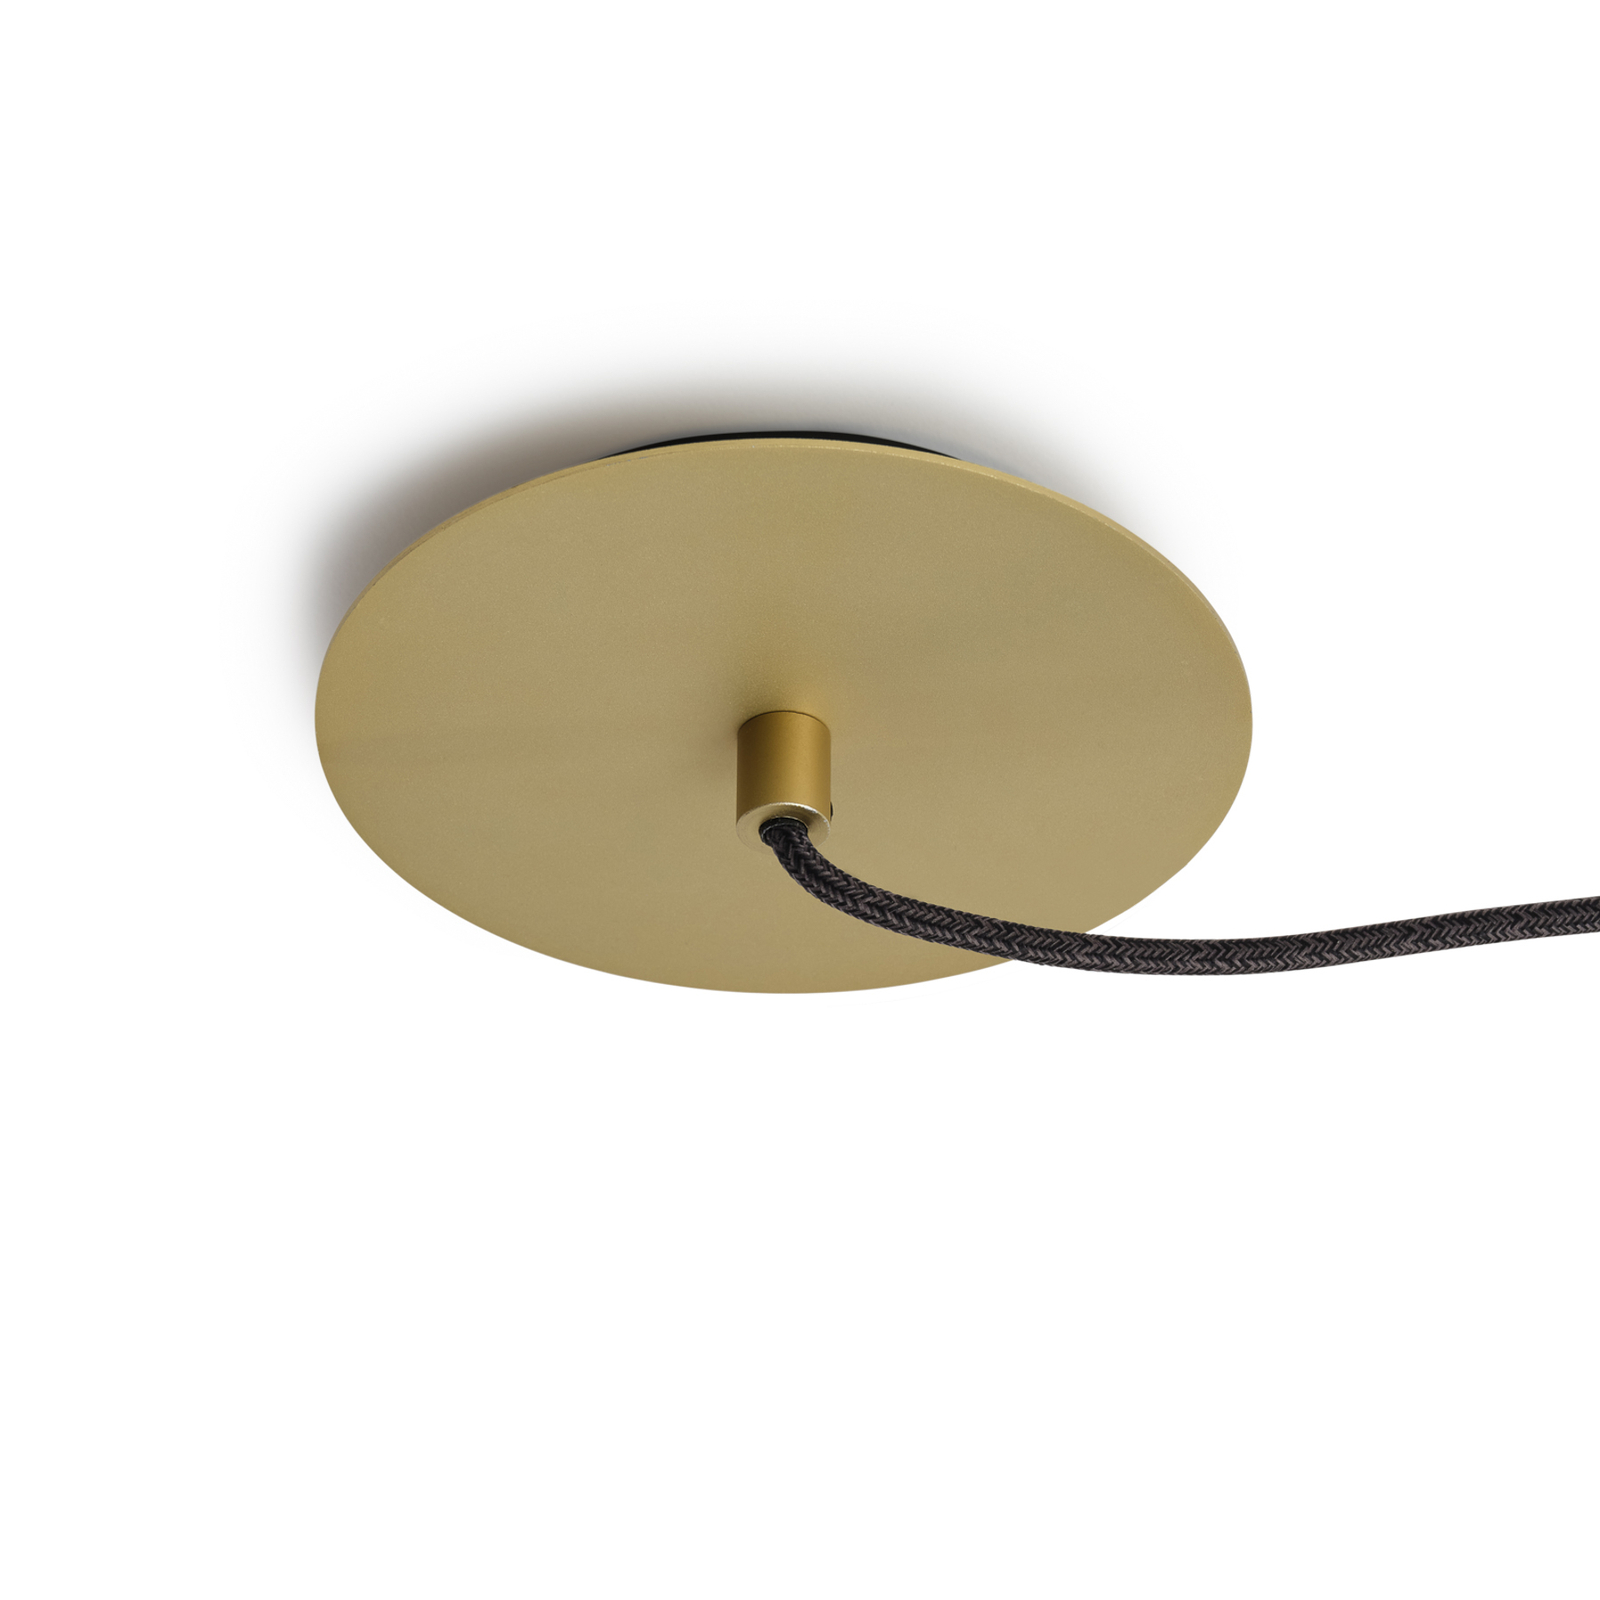 Tala Hängeleuchte Loop small, Alu, LED-Globe IV, gold